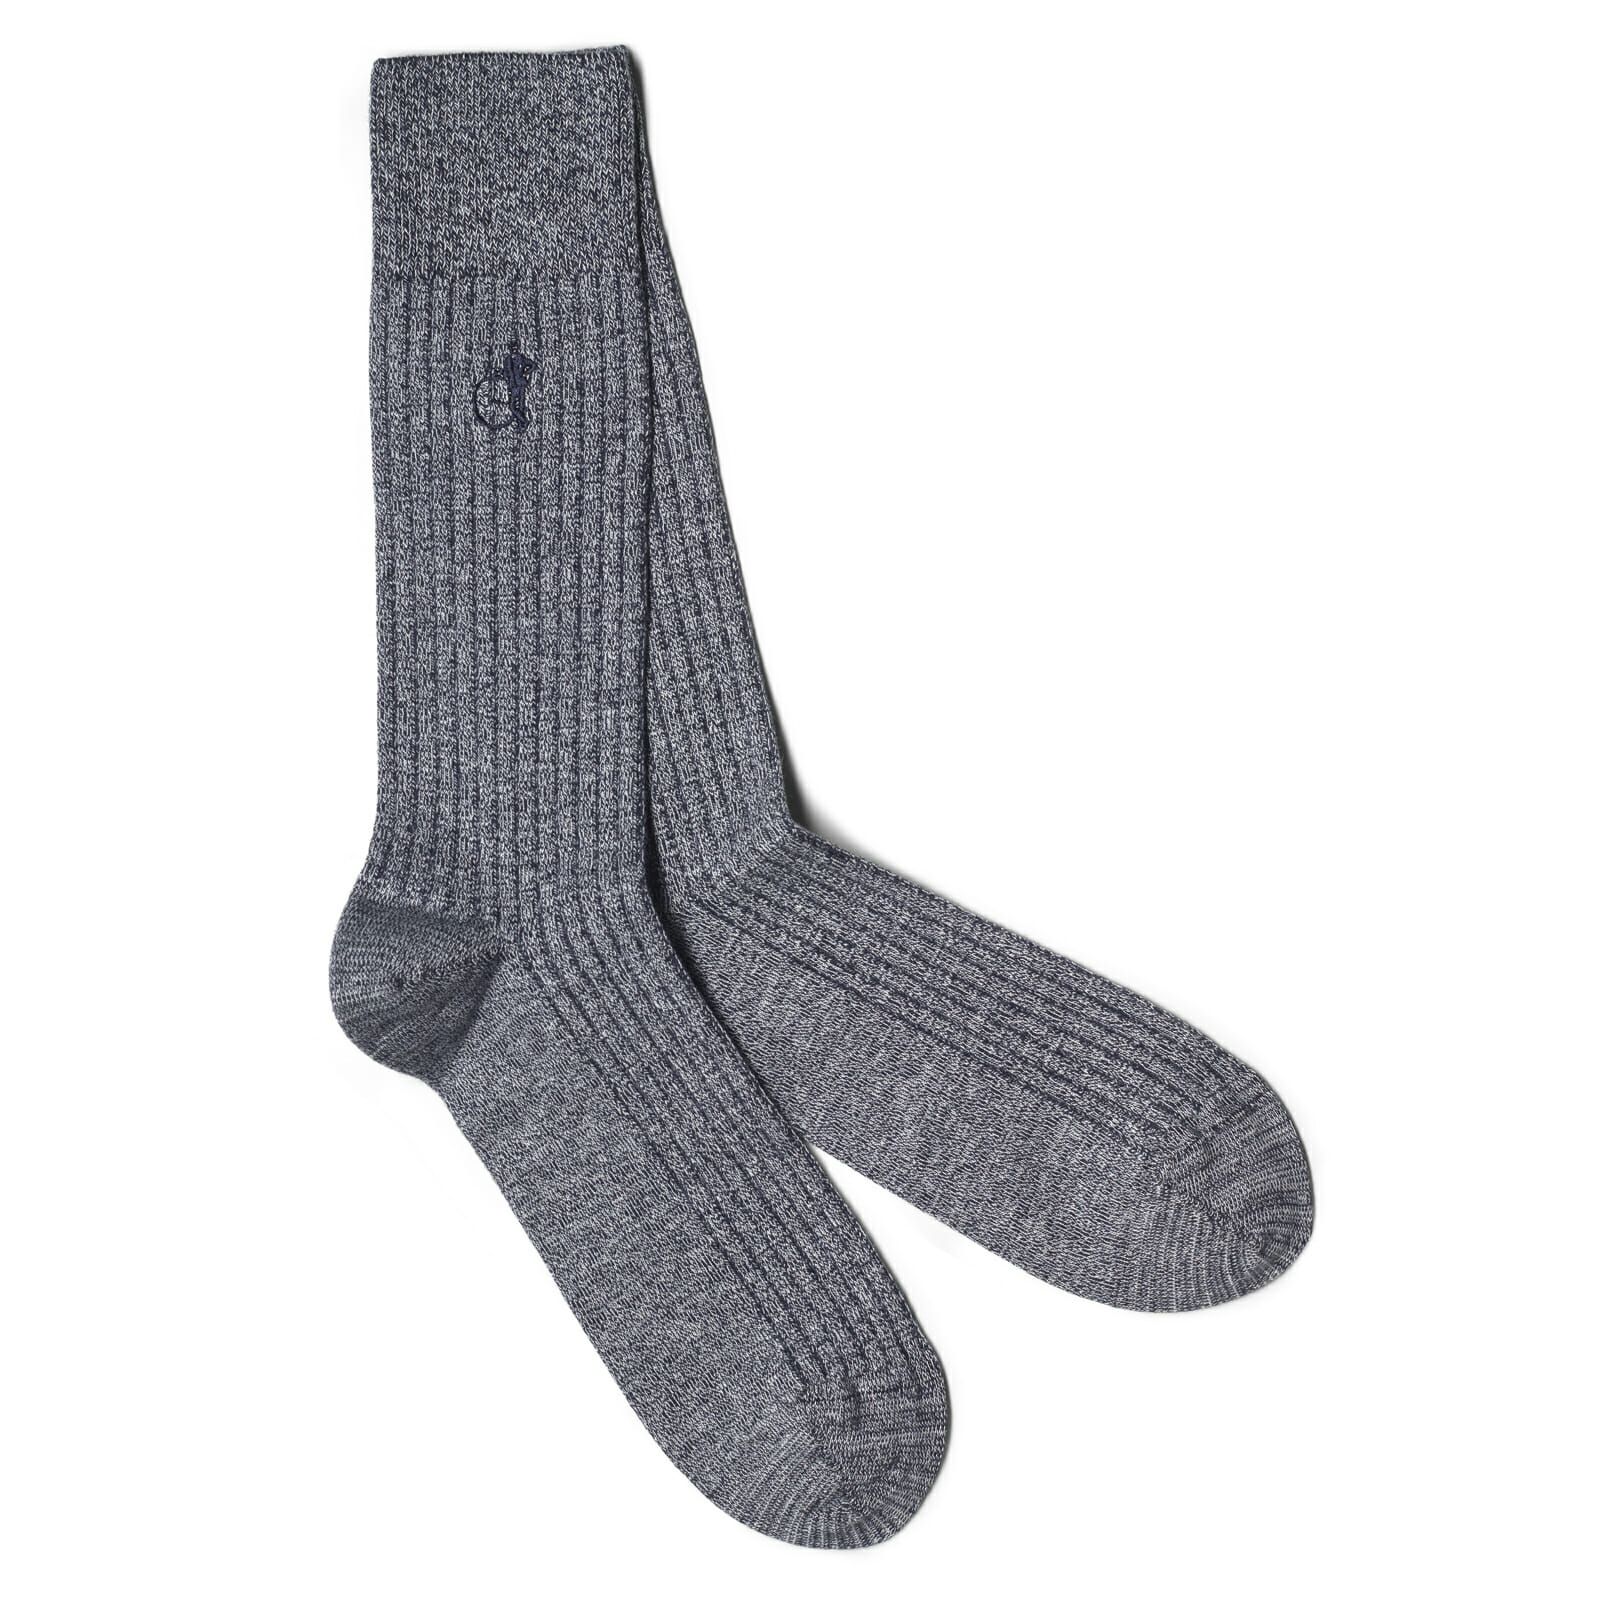 Simply Marl Socks | Luxury Socks for Men | London Sock Co.